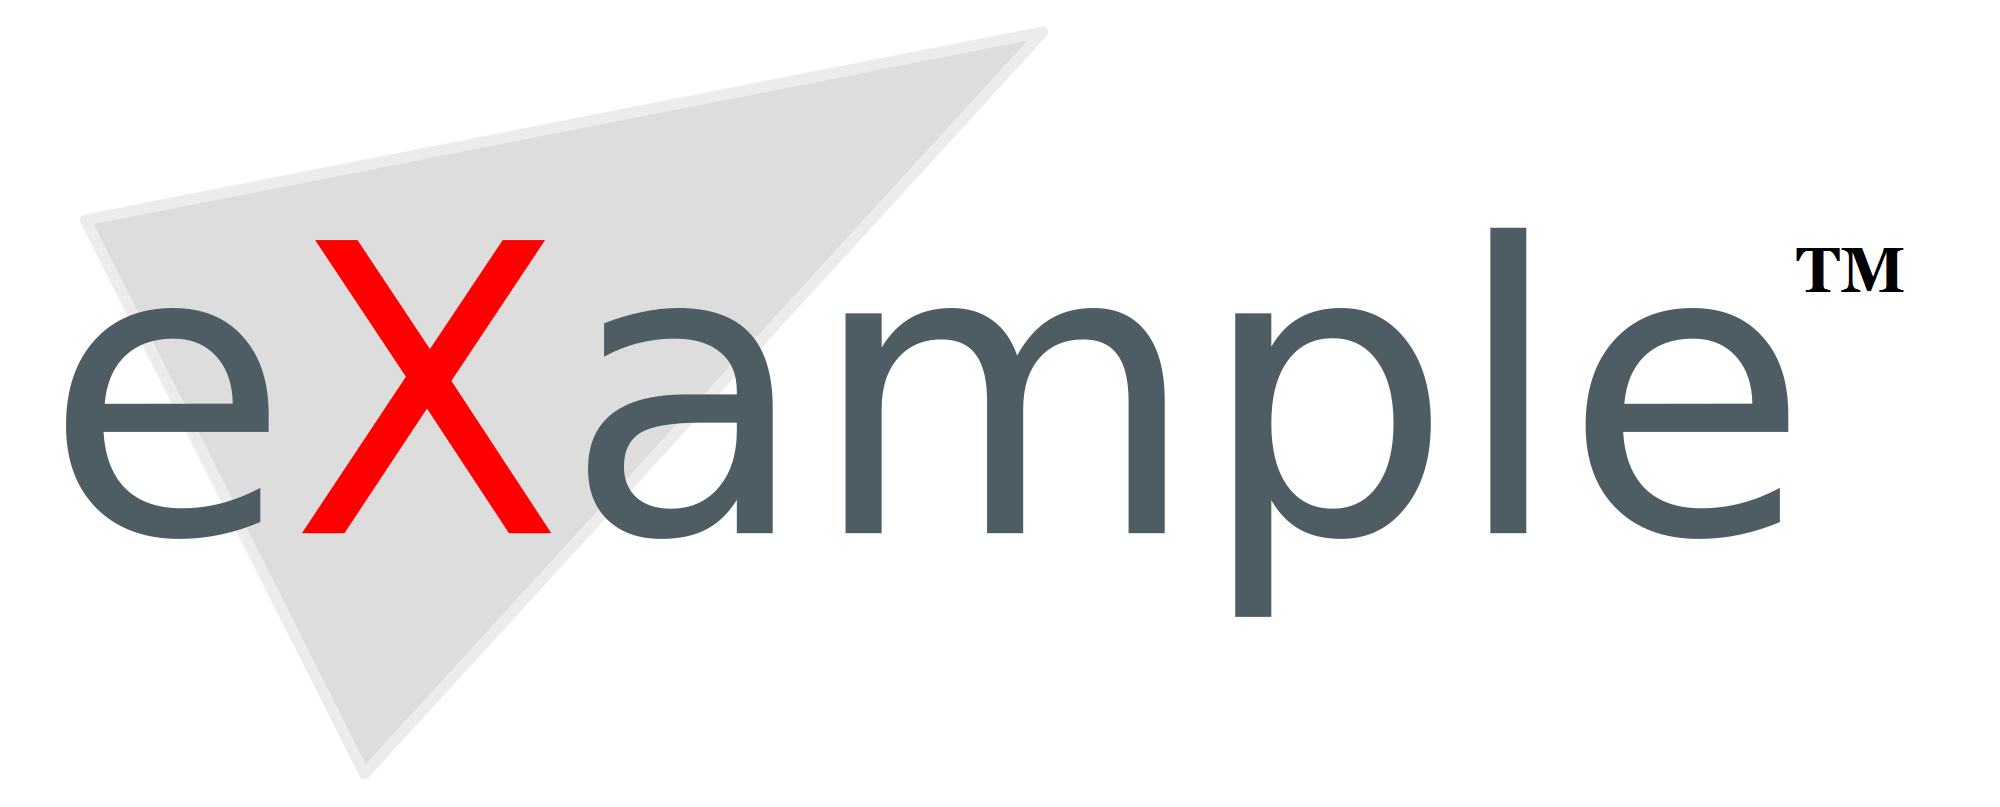 Sample IT Company Logo - Sample company logo png 6 » PNG Image